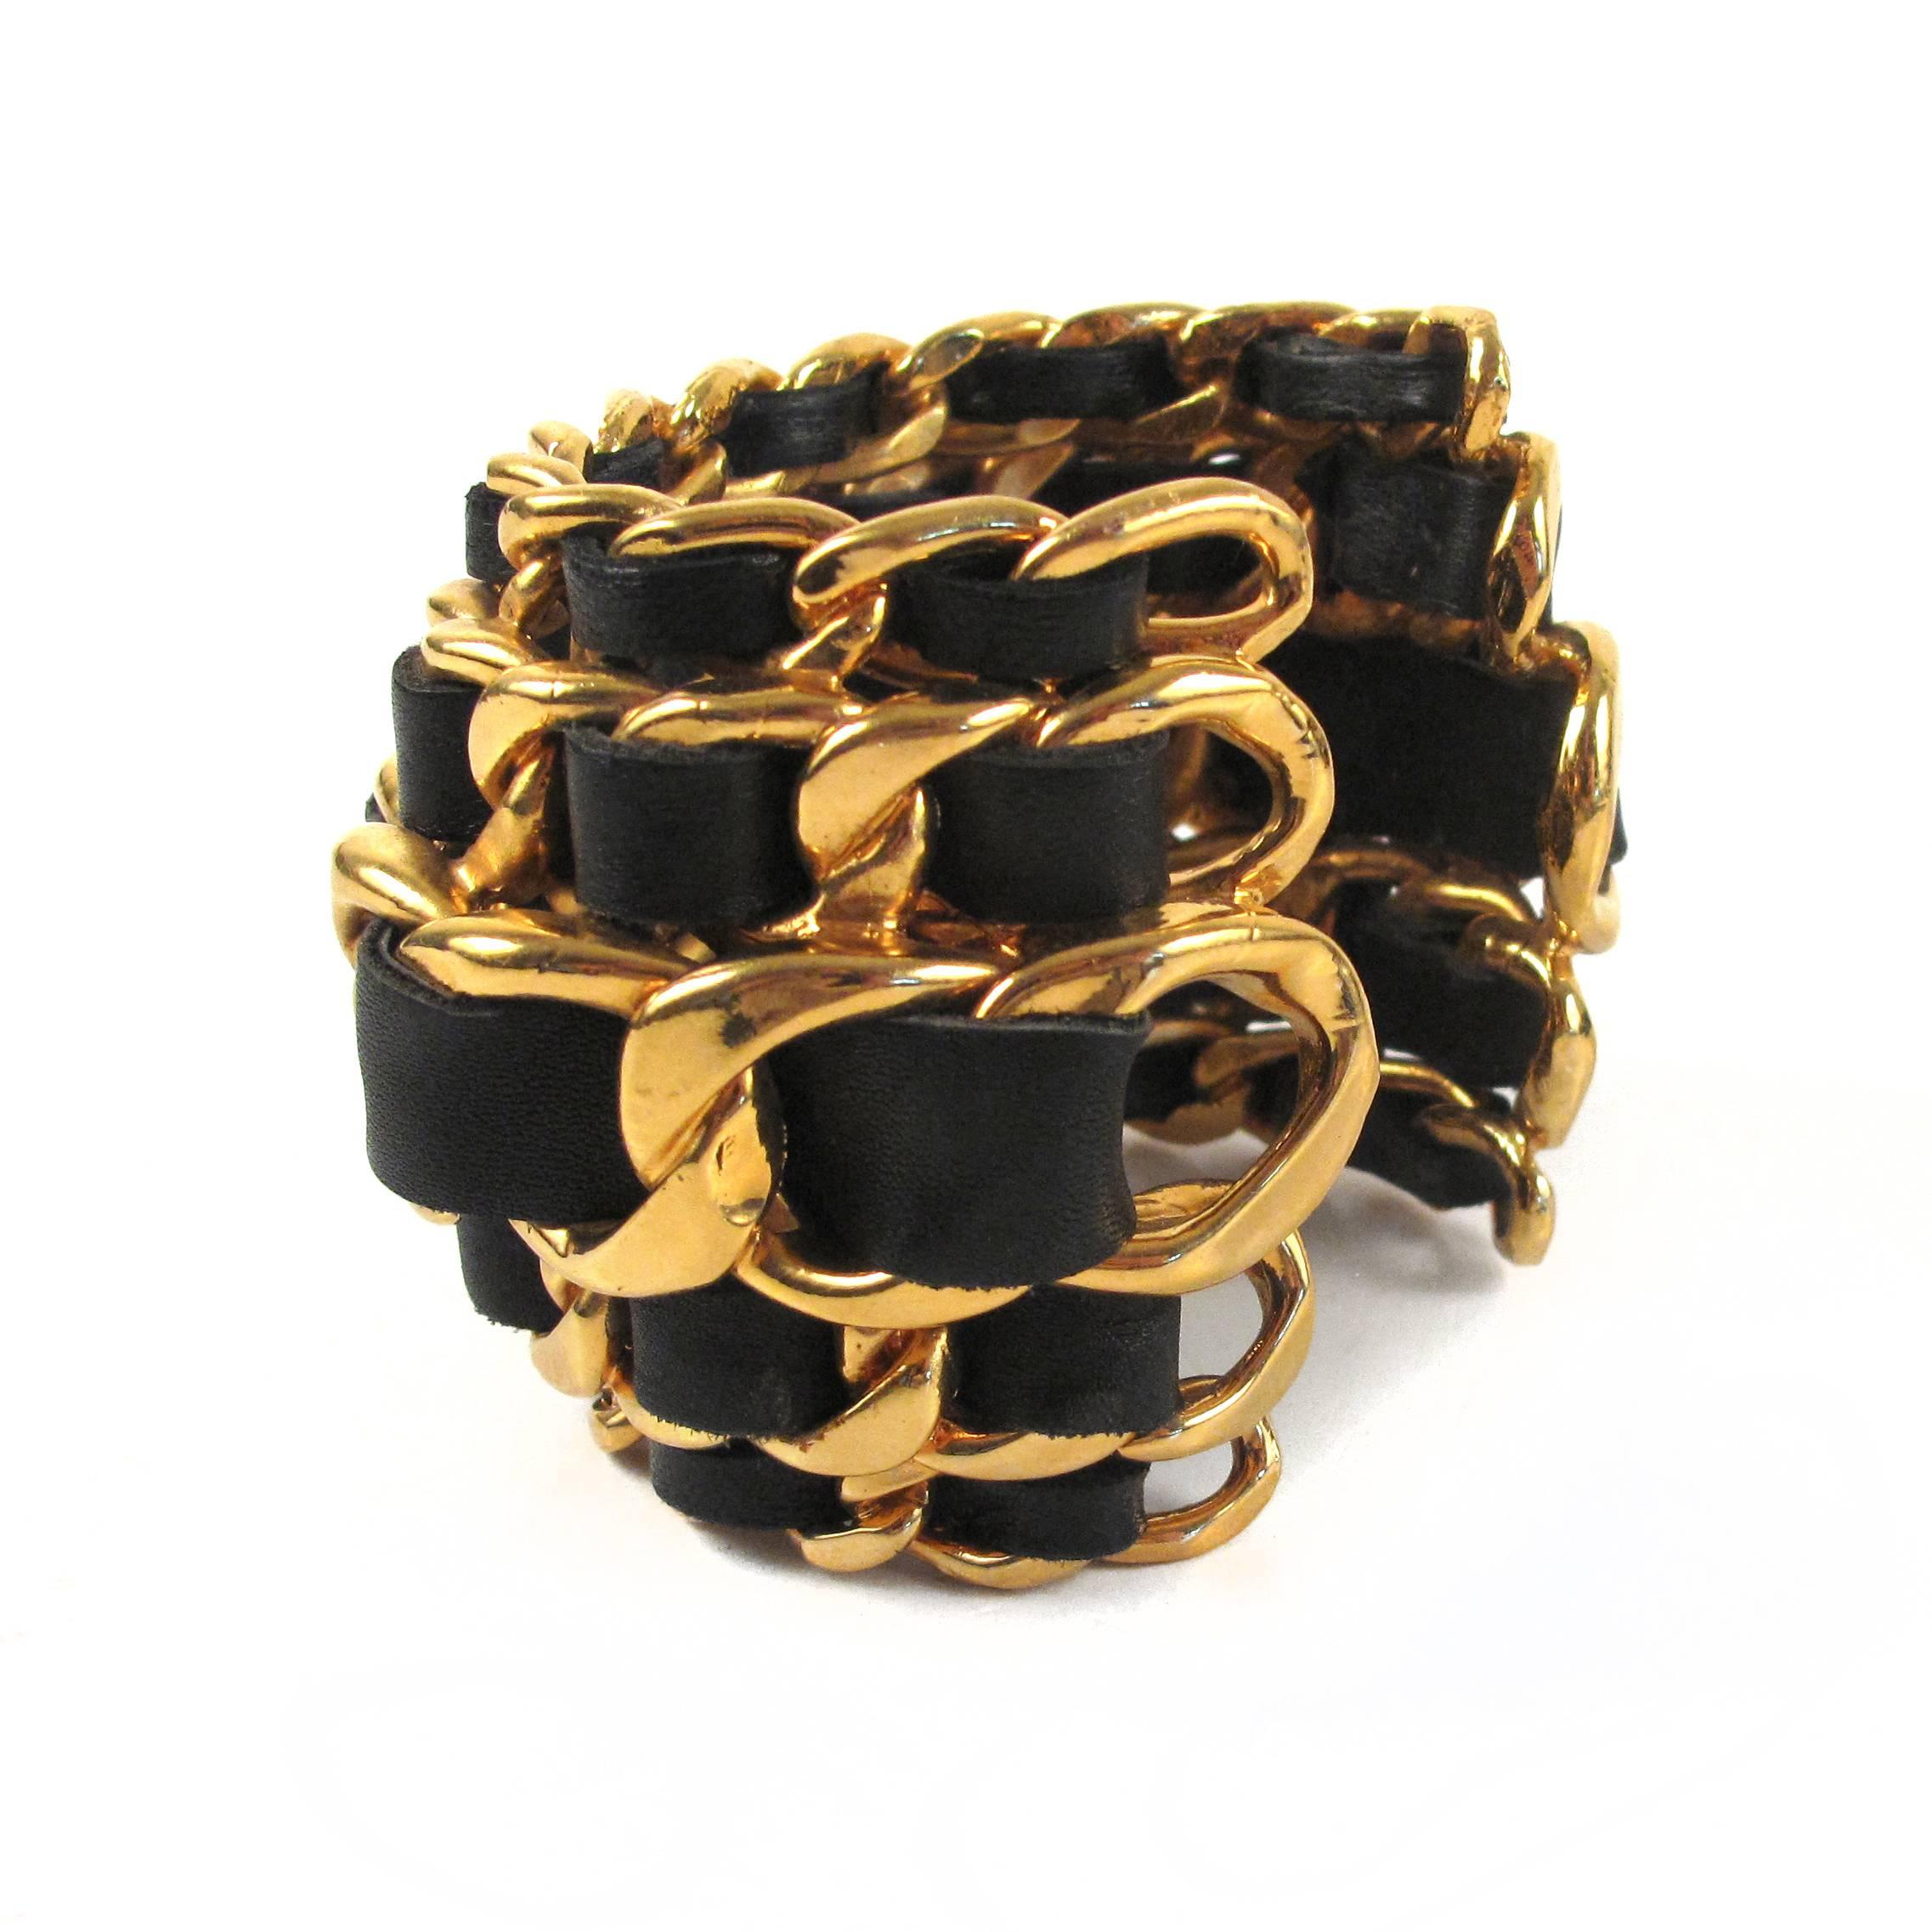 Women's Chanel Cuff - XL Wide Chain Bracelet Vintage Black Gold Leather Bangle CC Charm